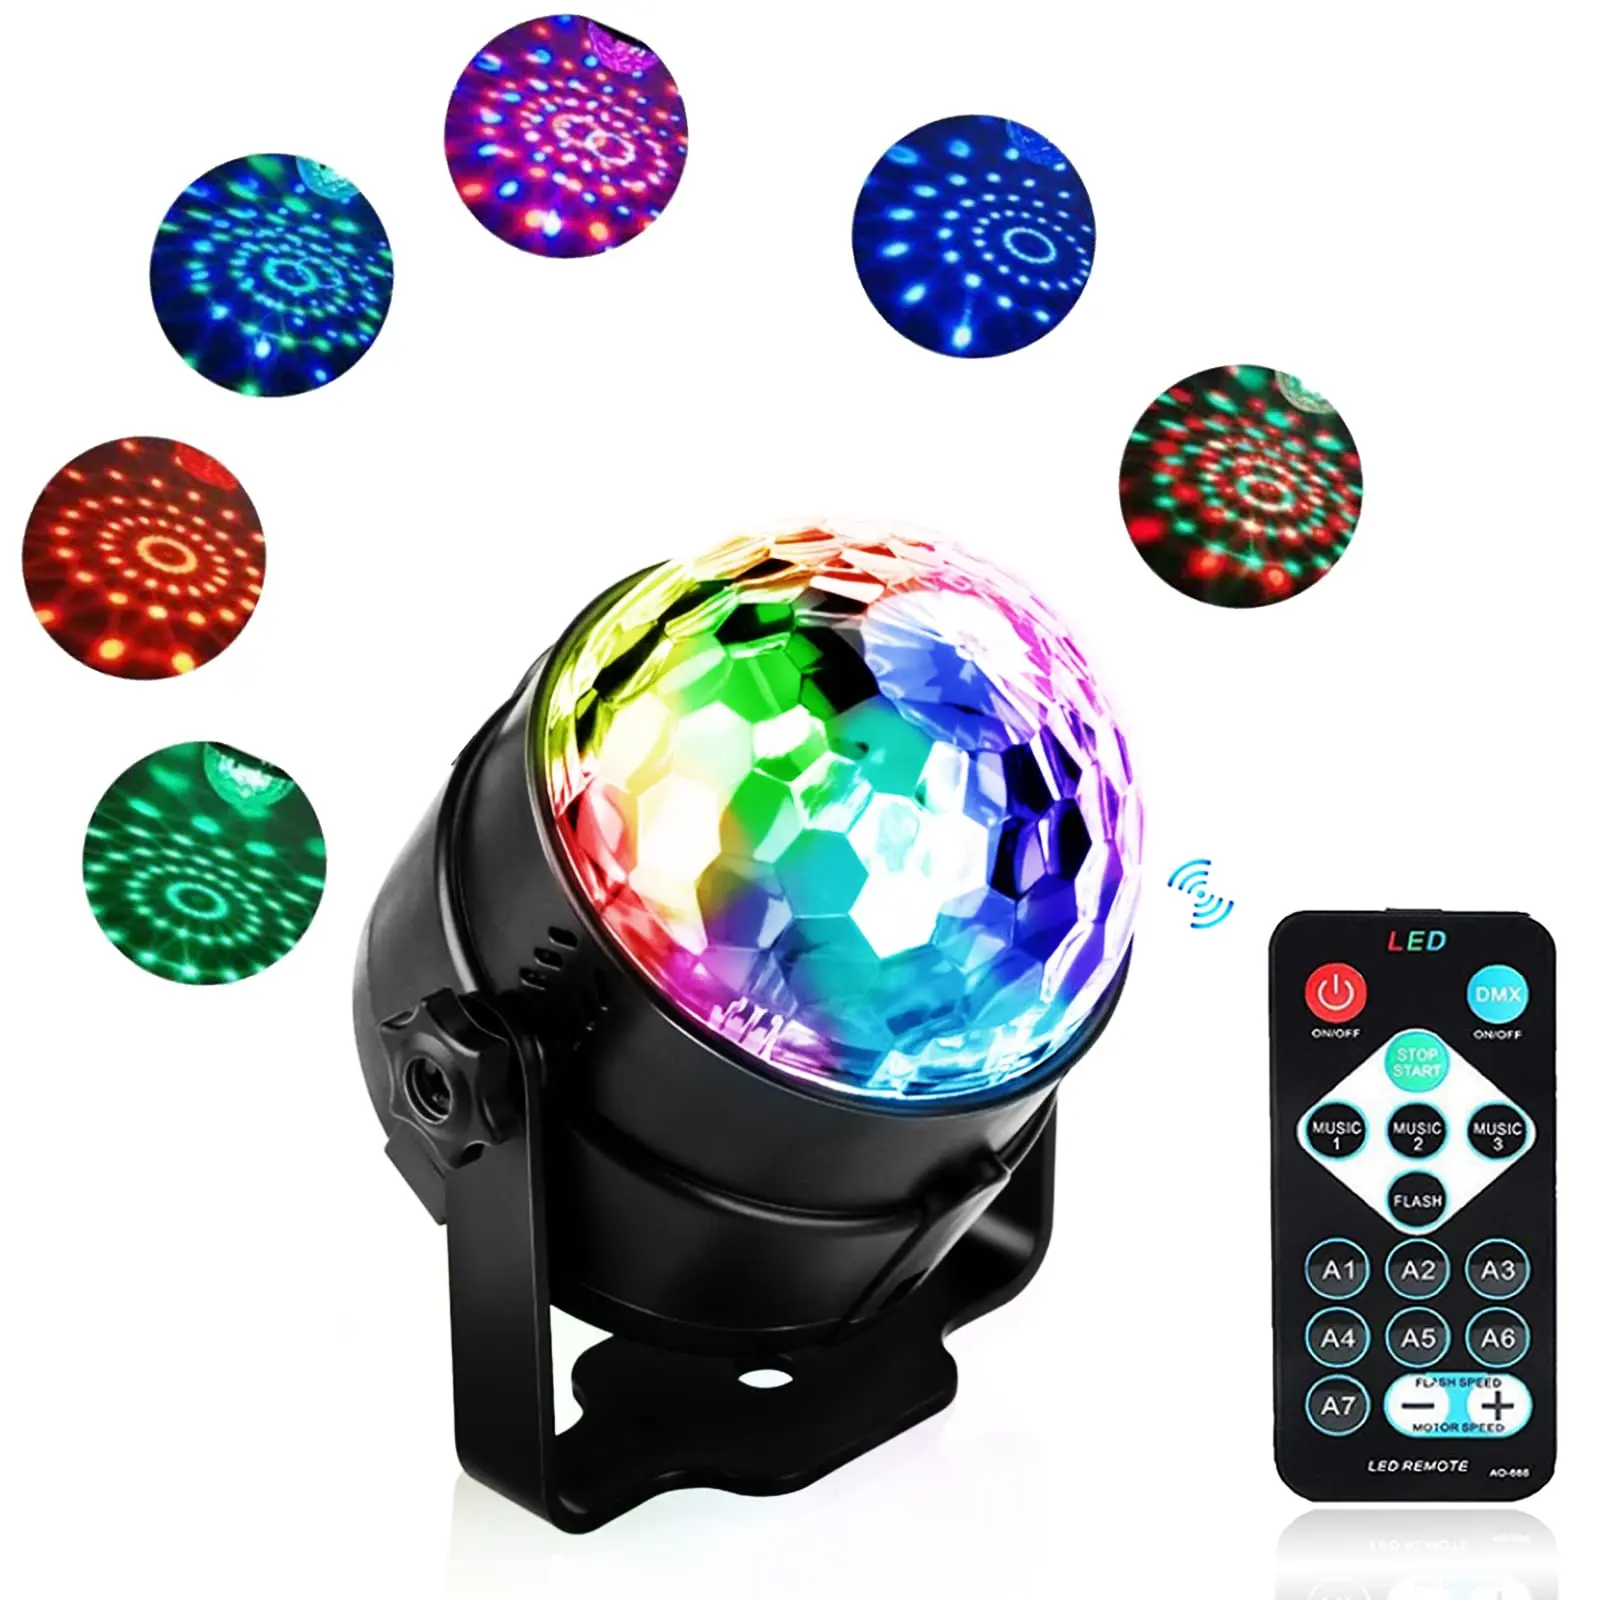 3W Uplight आरजीबी गेंद डिस्को गेंद DMX डिस्को रोशनी रिमोट कंट्रोल पार्टी रोशनी ध्वनि सक्रिय मूड जादू स्ट्रोब दीपक डीजे प्रकाश